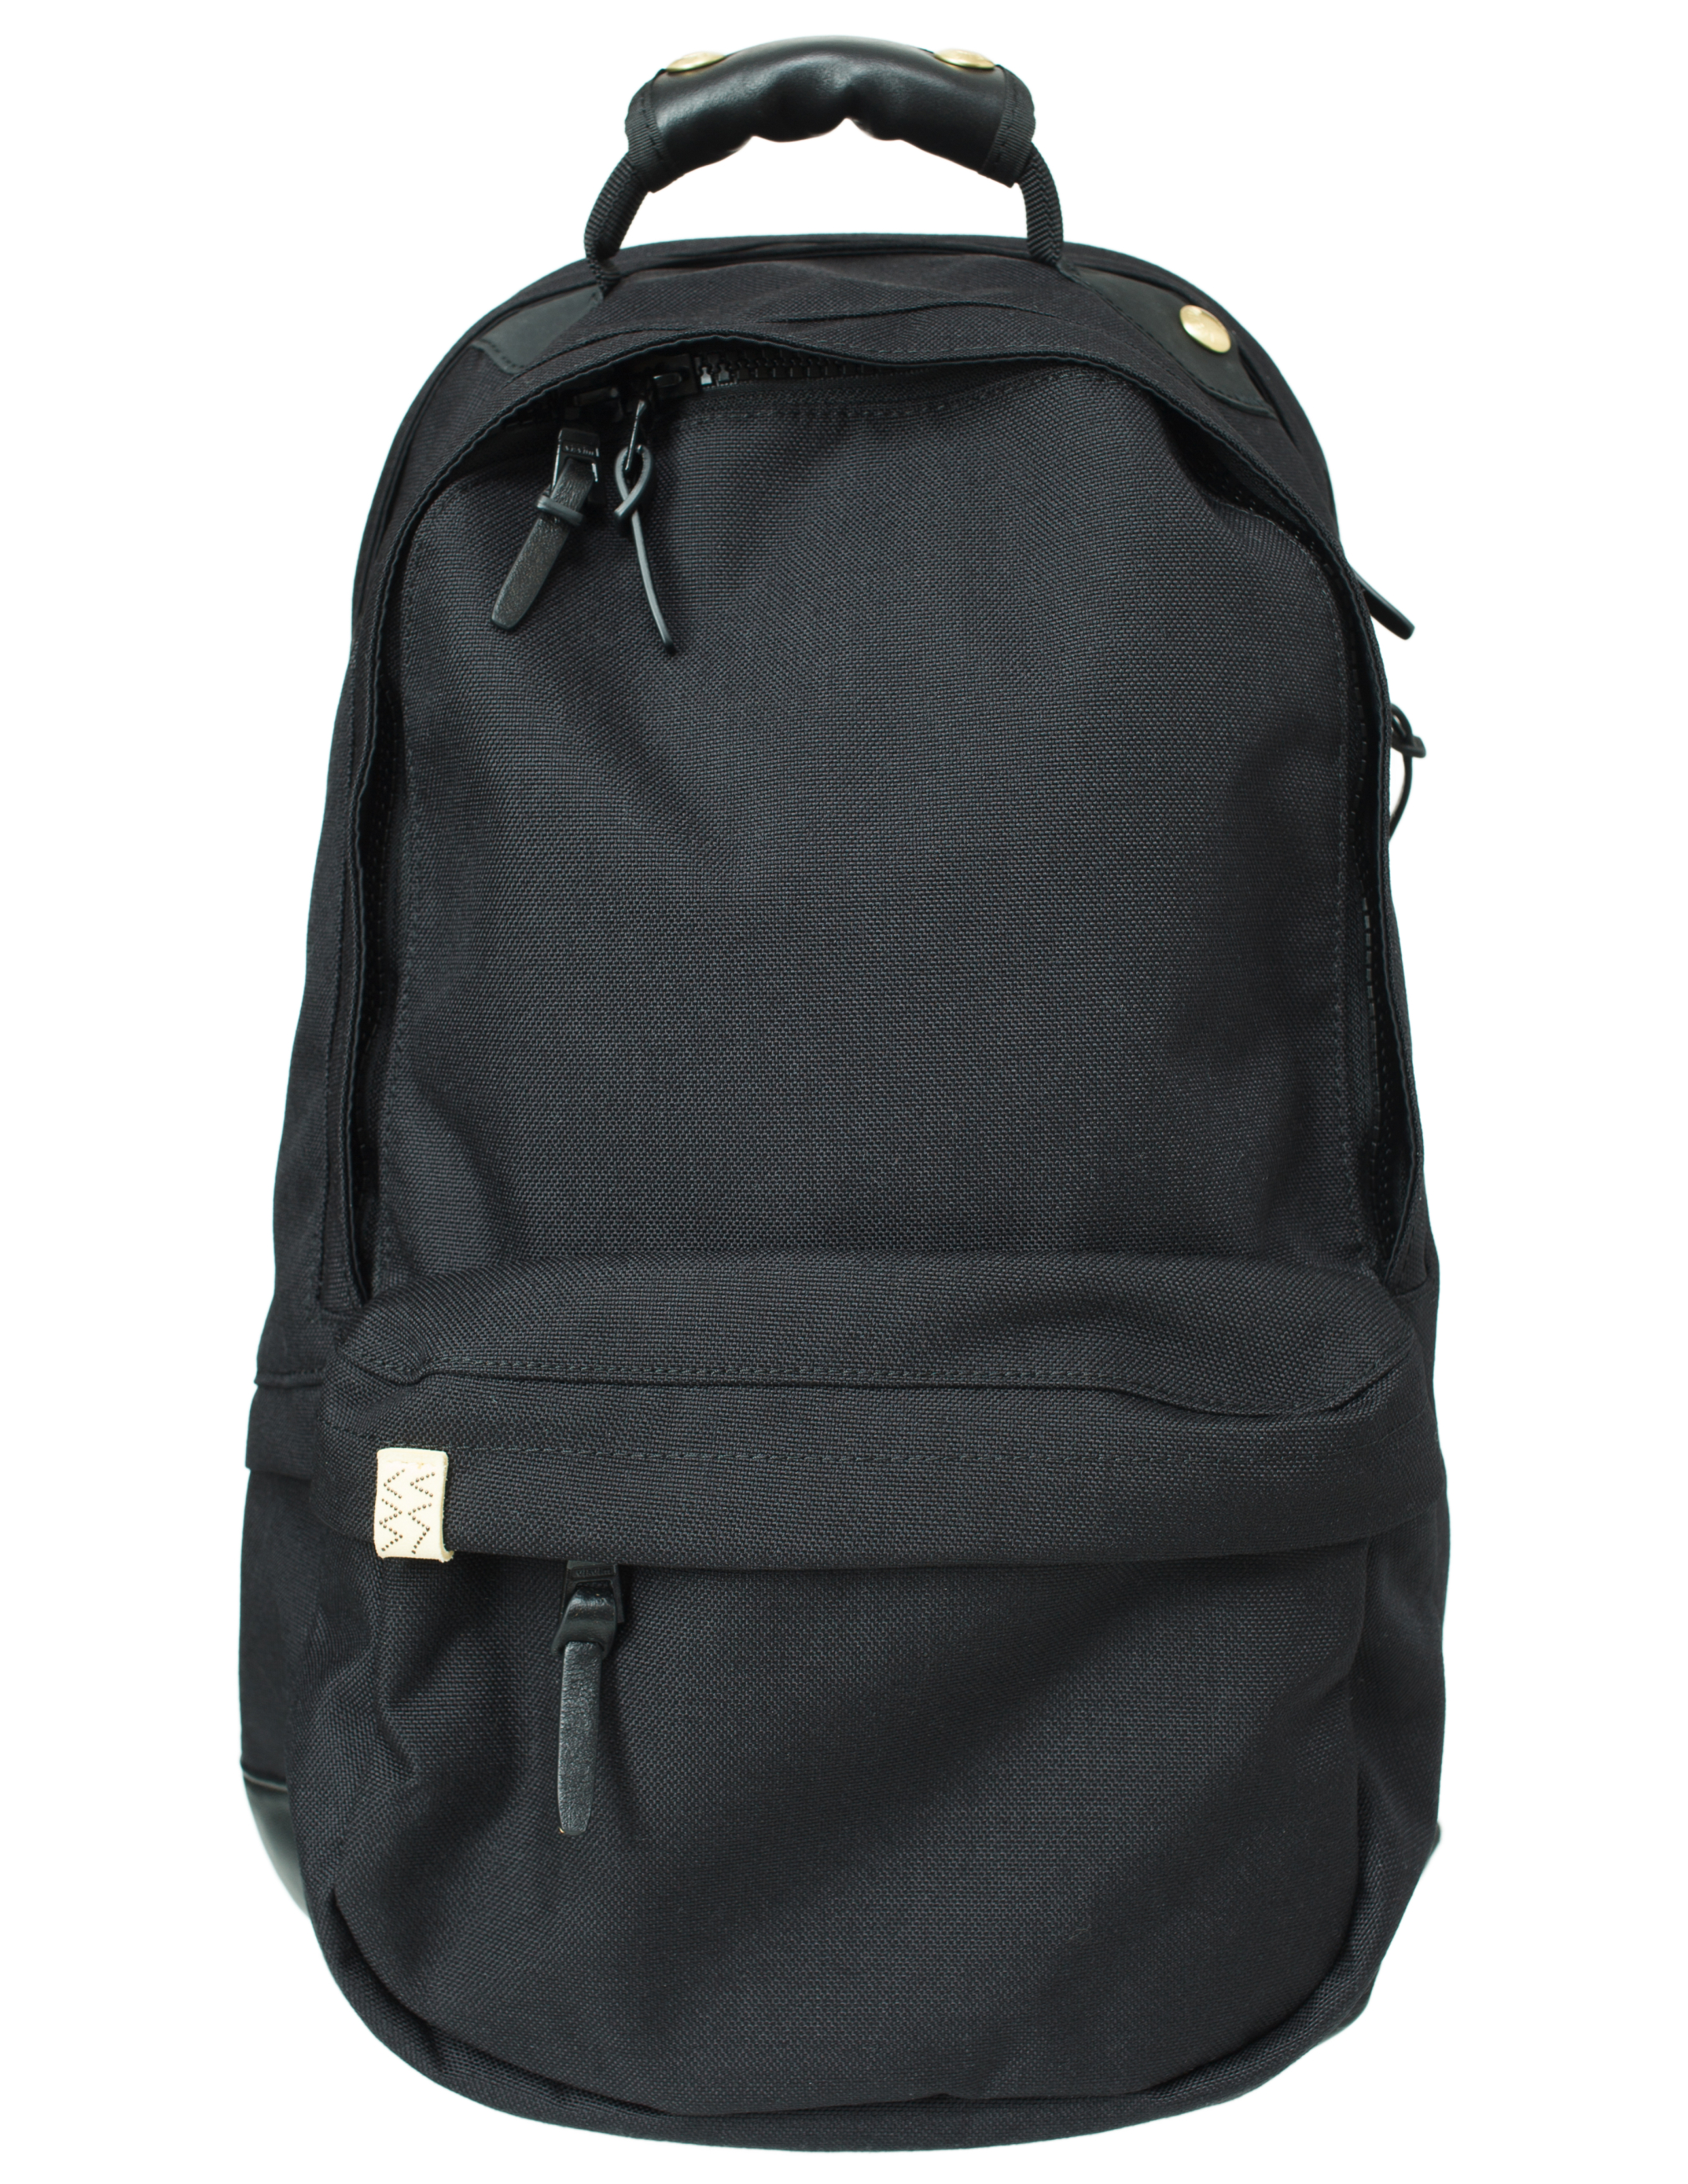 Комбинированный рюкзак Cordura 22L visvim 0123103003032/BLACK, размер One Size 0123103003032/BLACK - фото 1